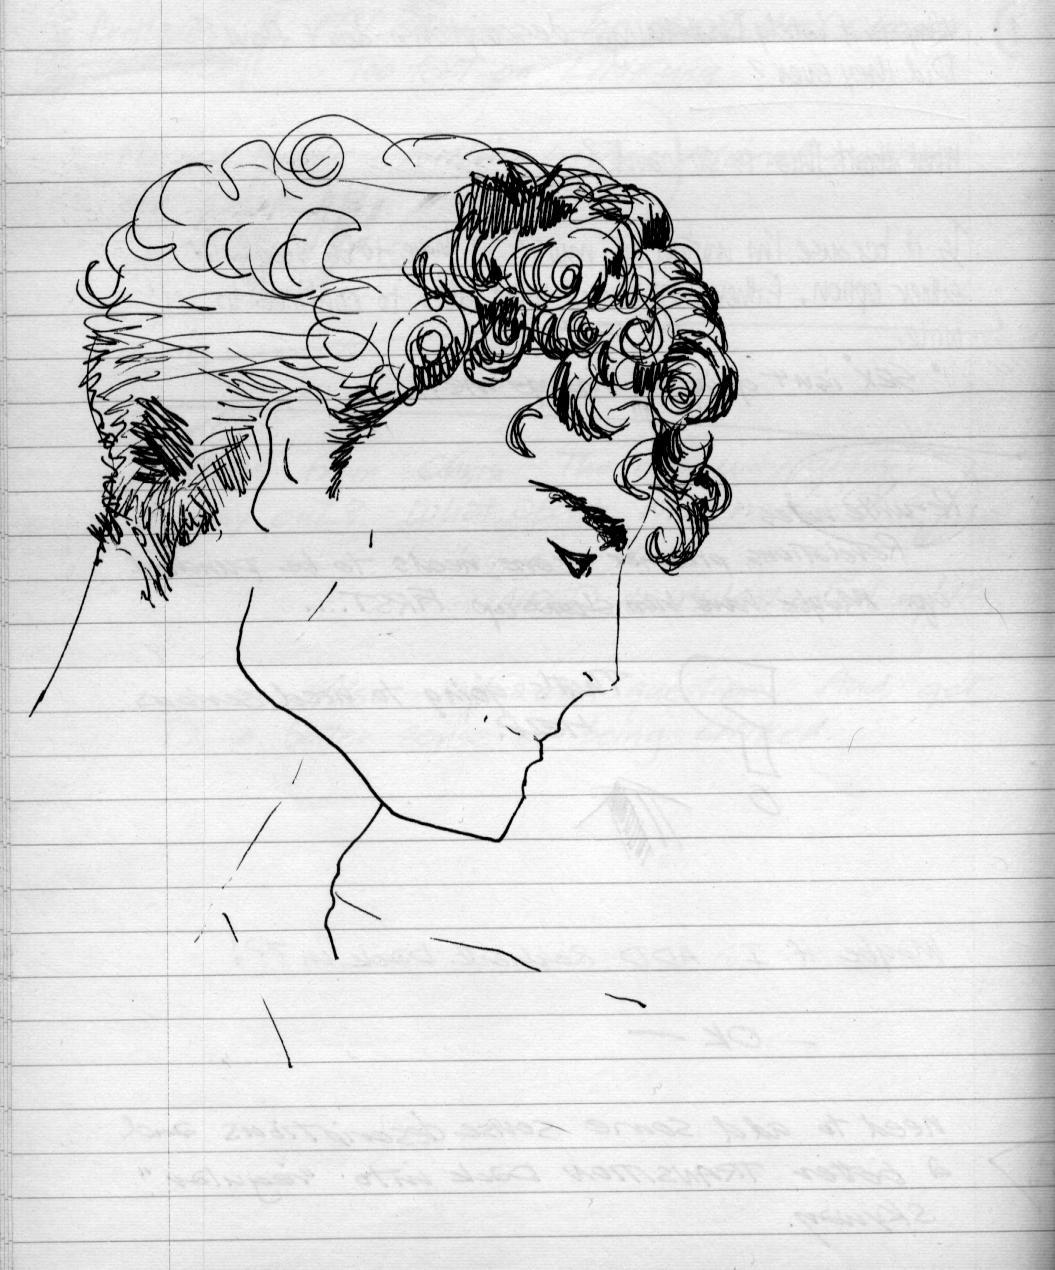 Sketch of Michael